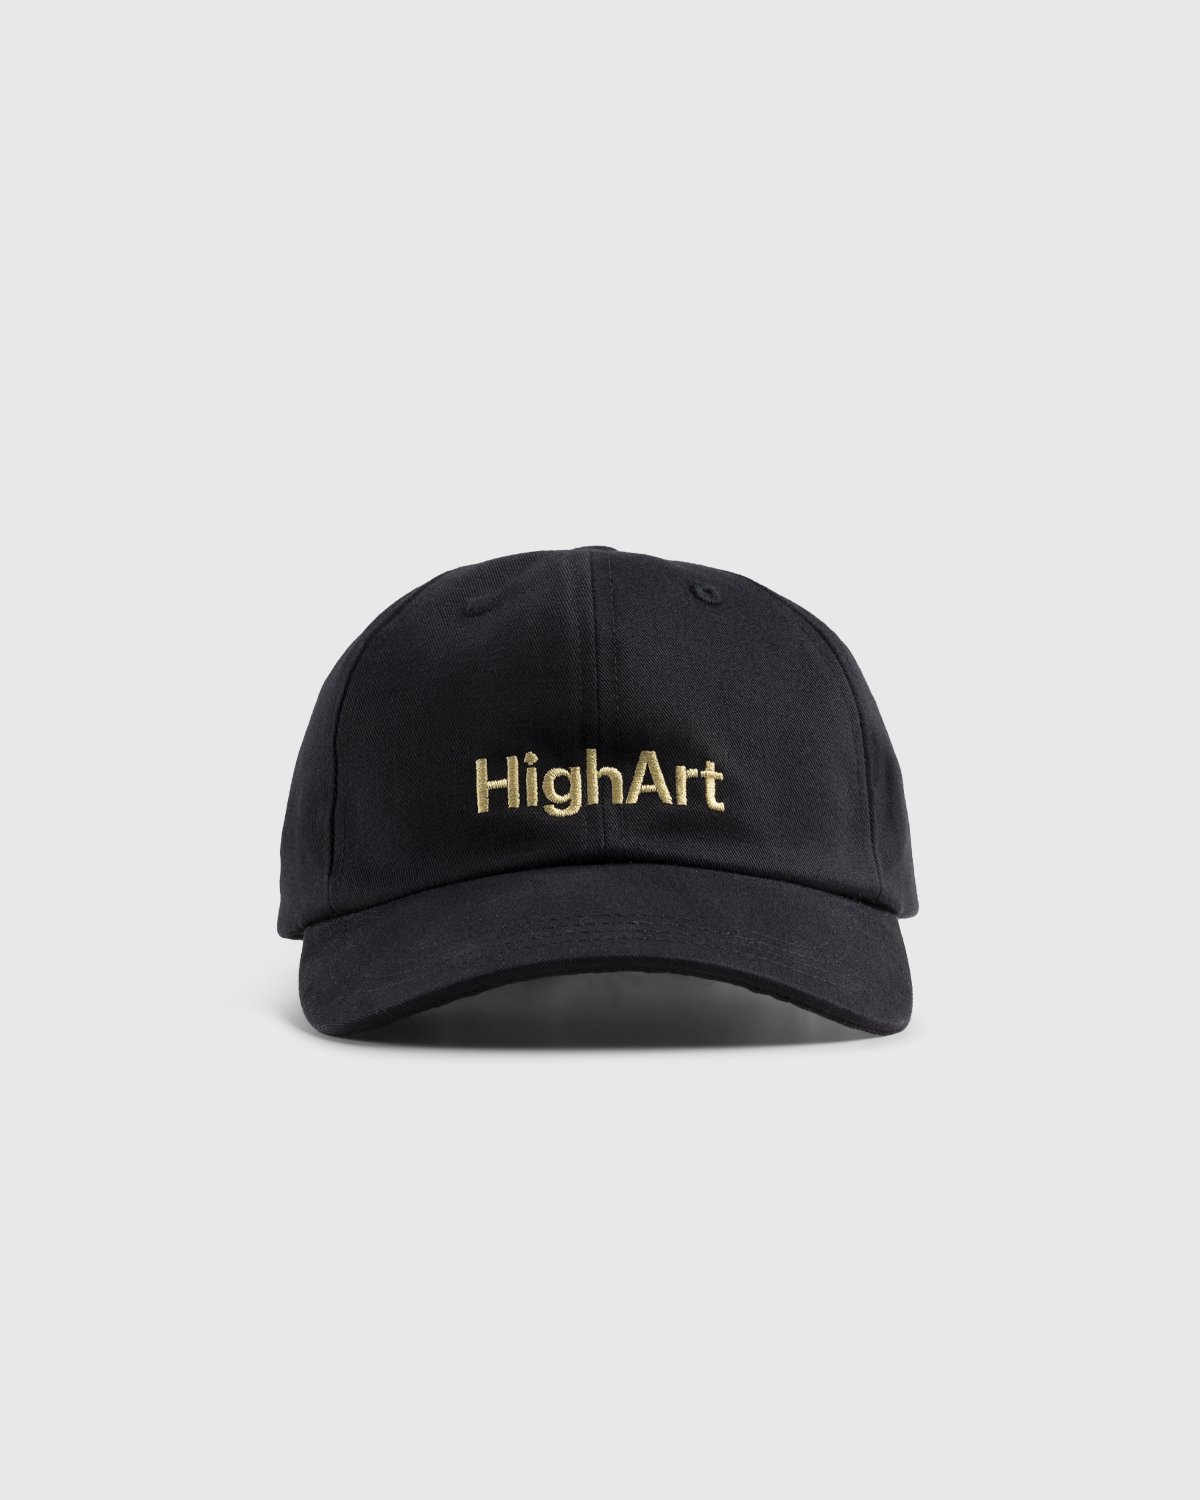 Highsnobiety - HIGHArt Cap Black - Accessories - Black - Image 2